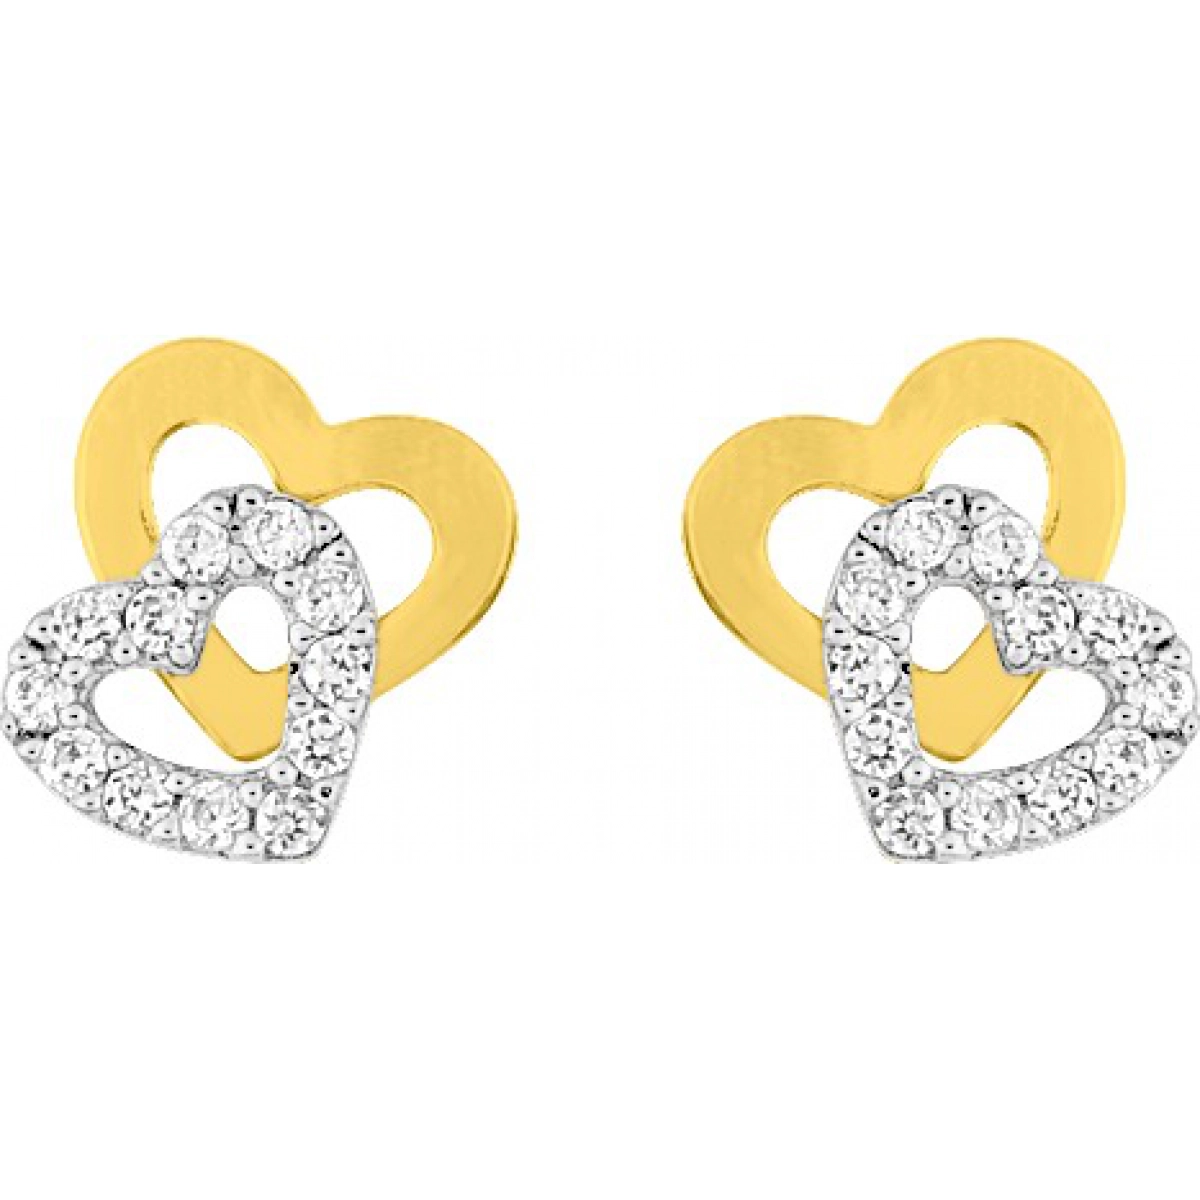 Earrings pair w. cz gold plated Brass 2TG  Lua Blanca  BSWI51Z.0